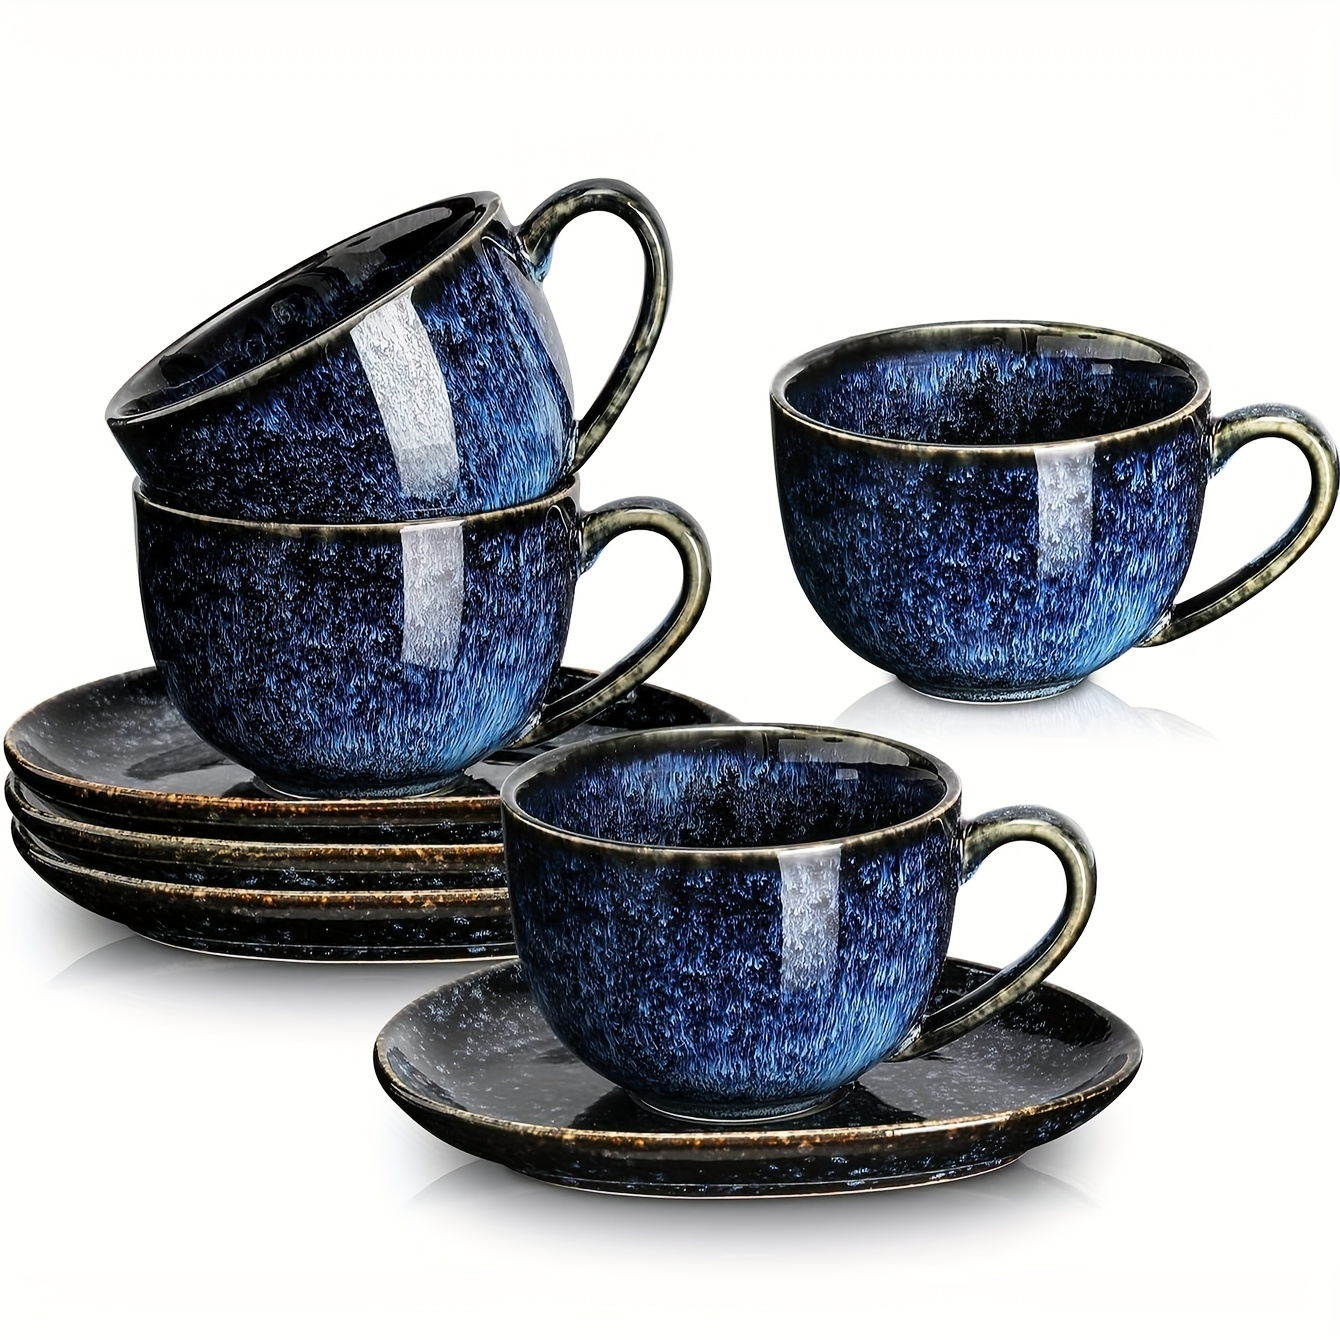 

4pcs, 6.5 Oz Cappuccino Cups With Saucers, Ceramic Coffee Cup For Double Shot, Au Lait, Latte, Tea, Cafe Mocha (starry Blue)